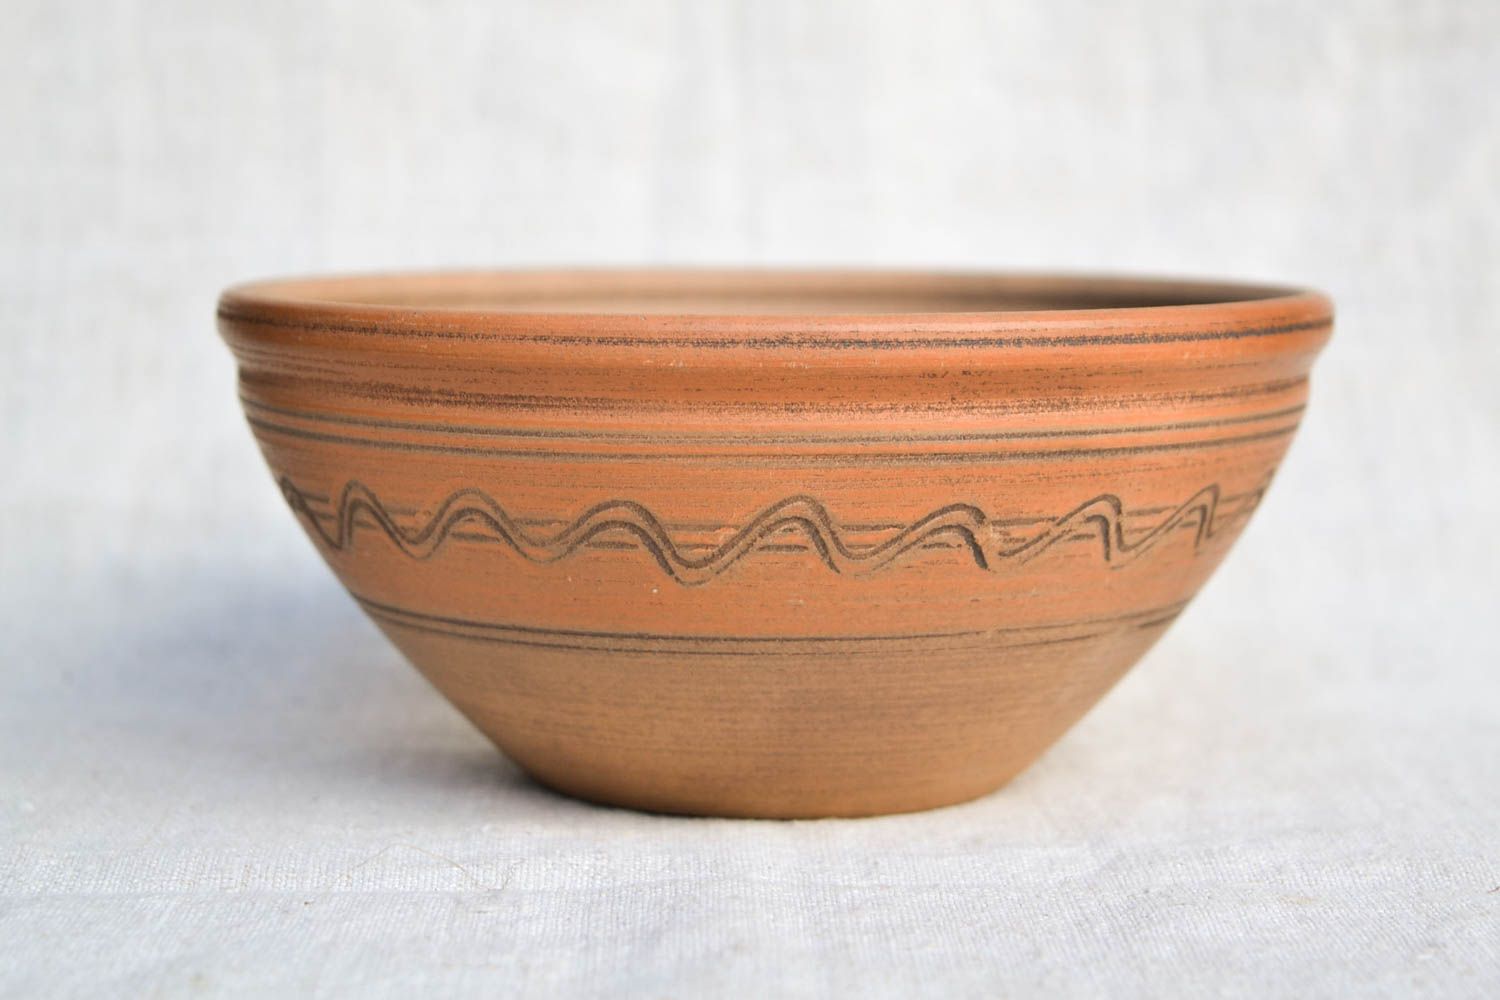 6 8 oz handmade ceramic Italian style cereal bowl 0,71 lb photo 3